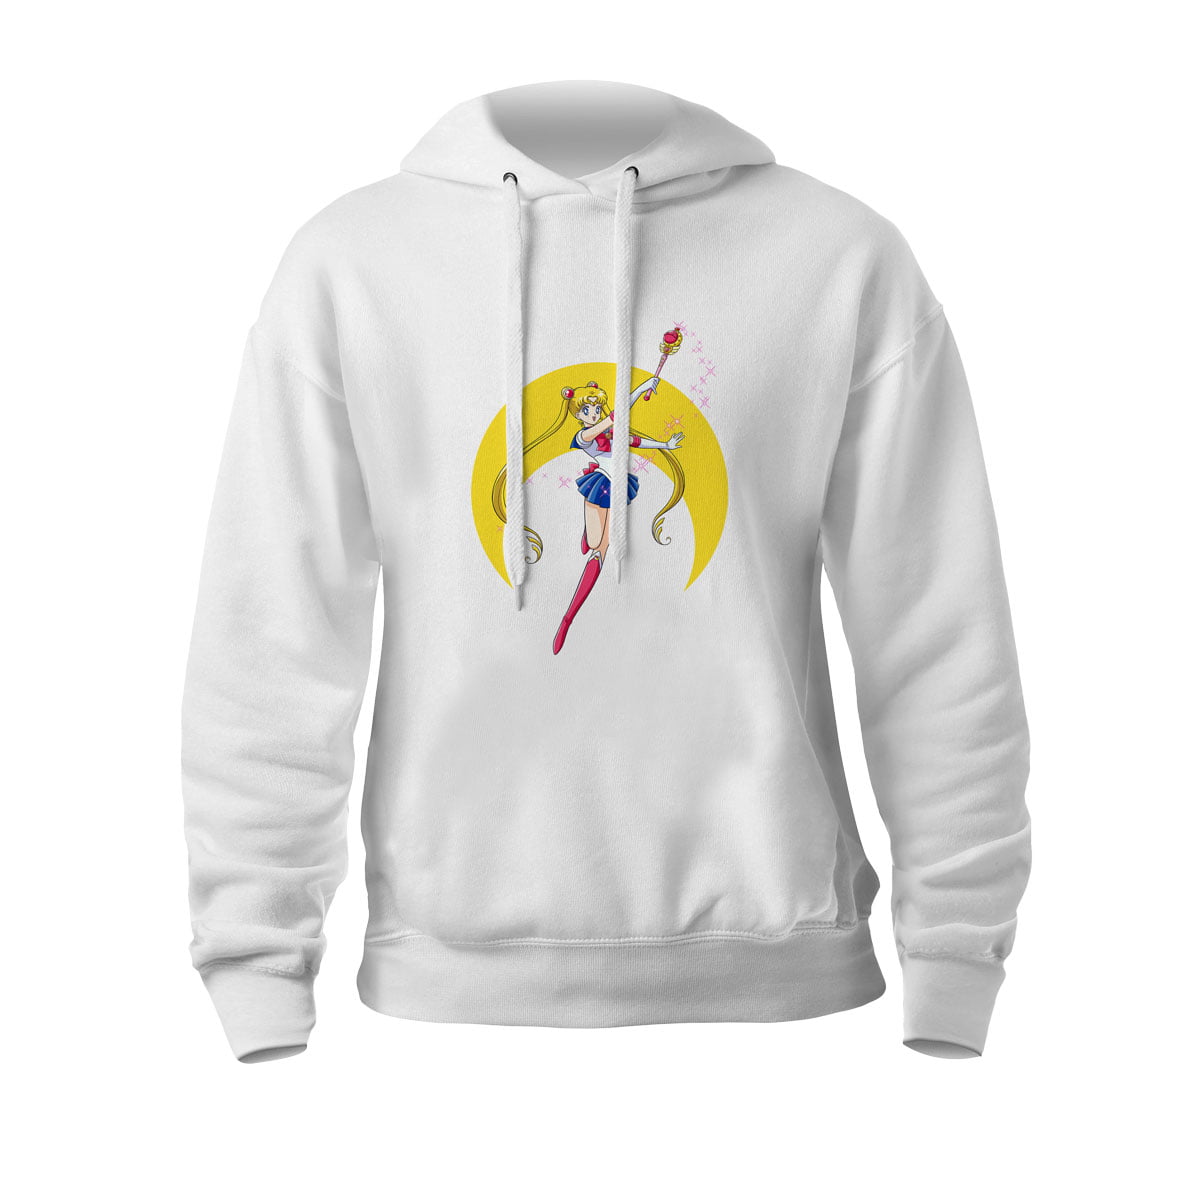 Sailor moon ay savascisi usagi kapsonlu b - sailor moon usagi ay savaşçısı unisex kapşonlu sweatshirt - figurex